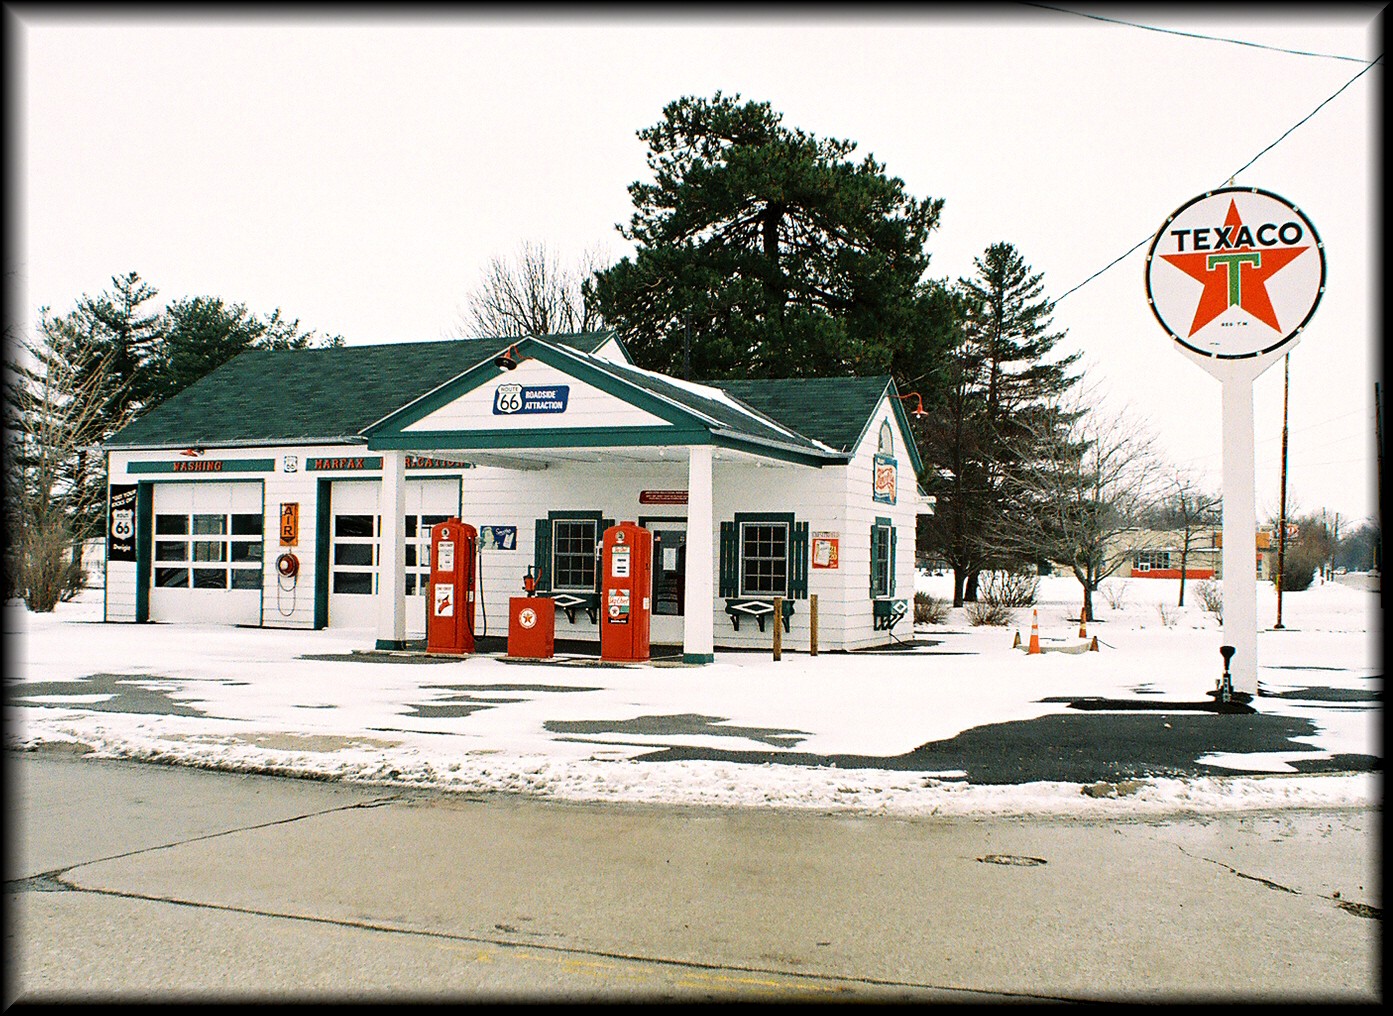 Ambler's Texaco Gas Station - Dwight, Illinois U.S.A. - January 28, 2008